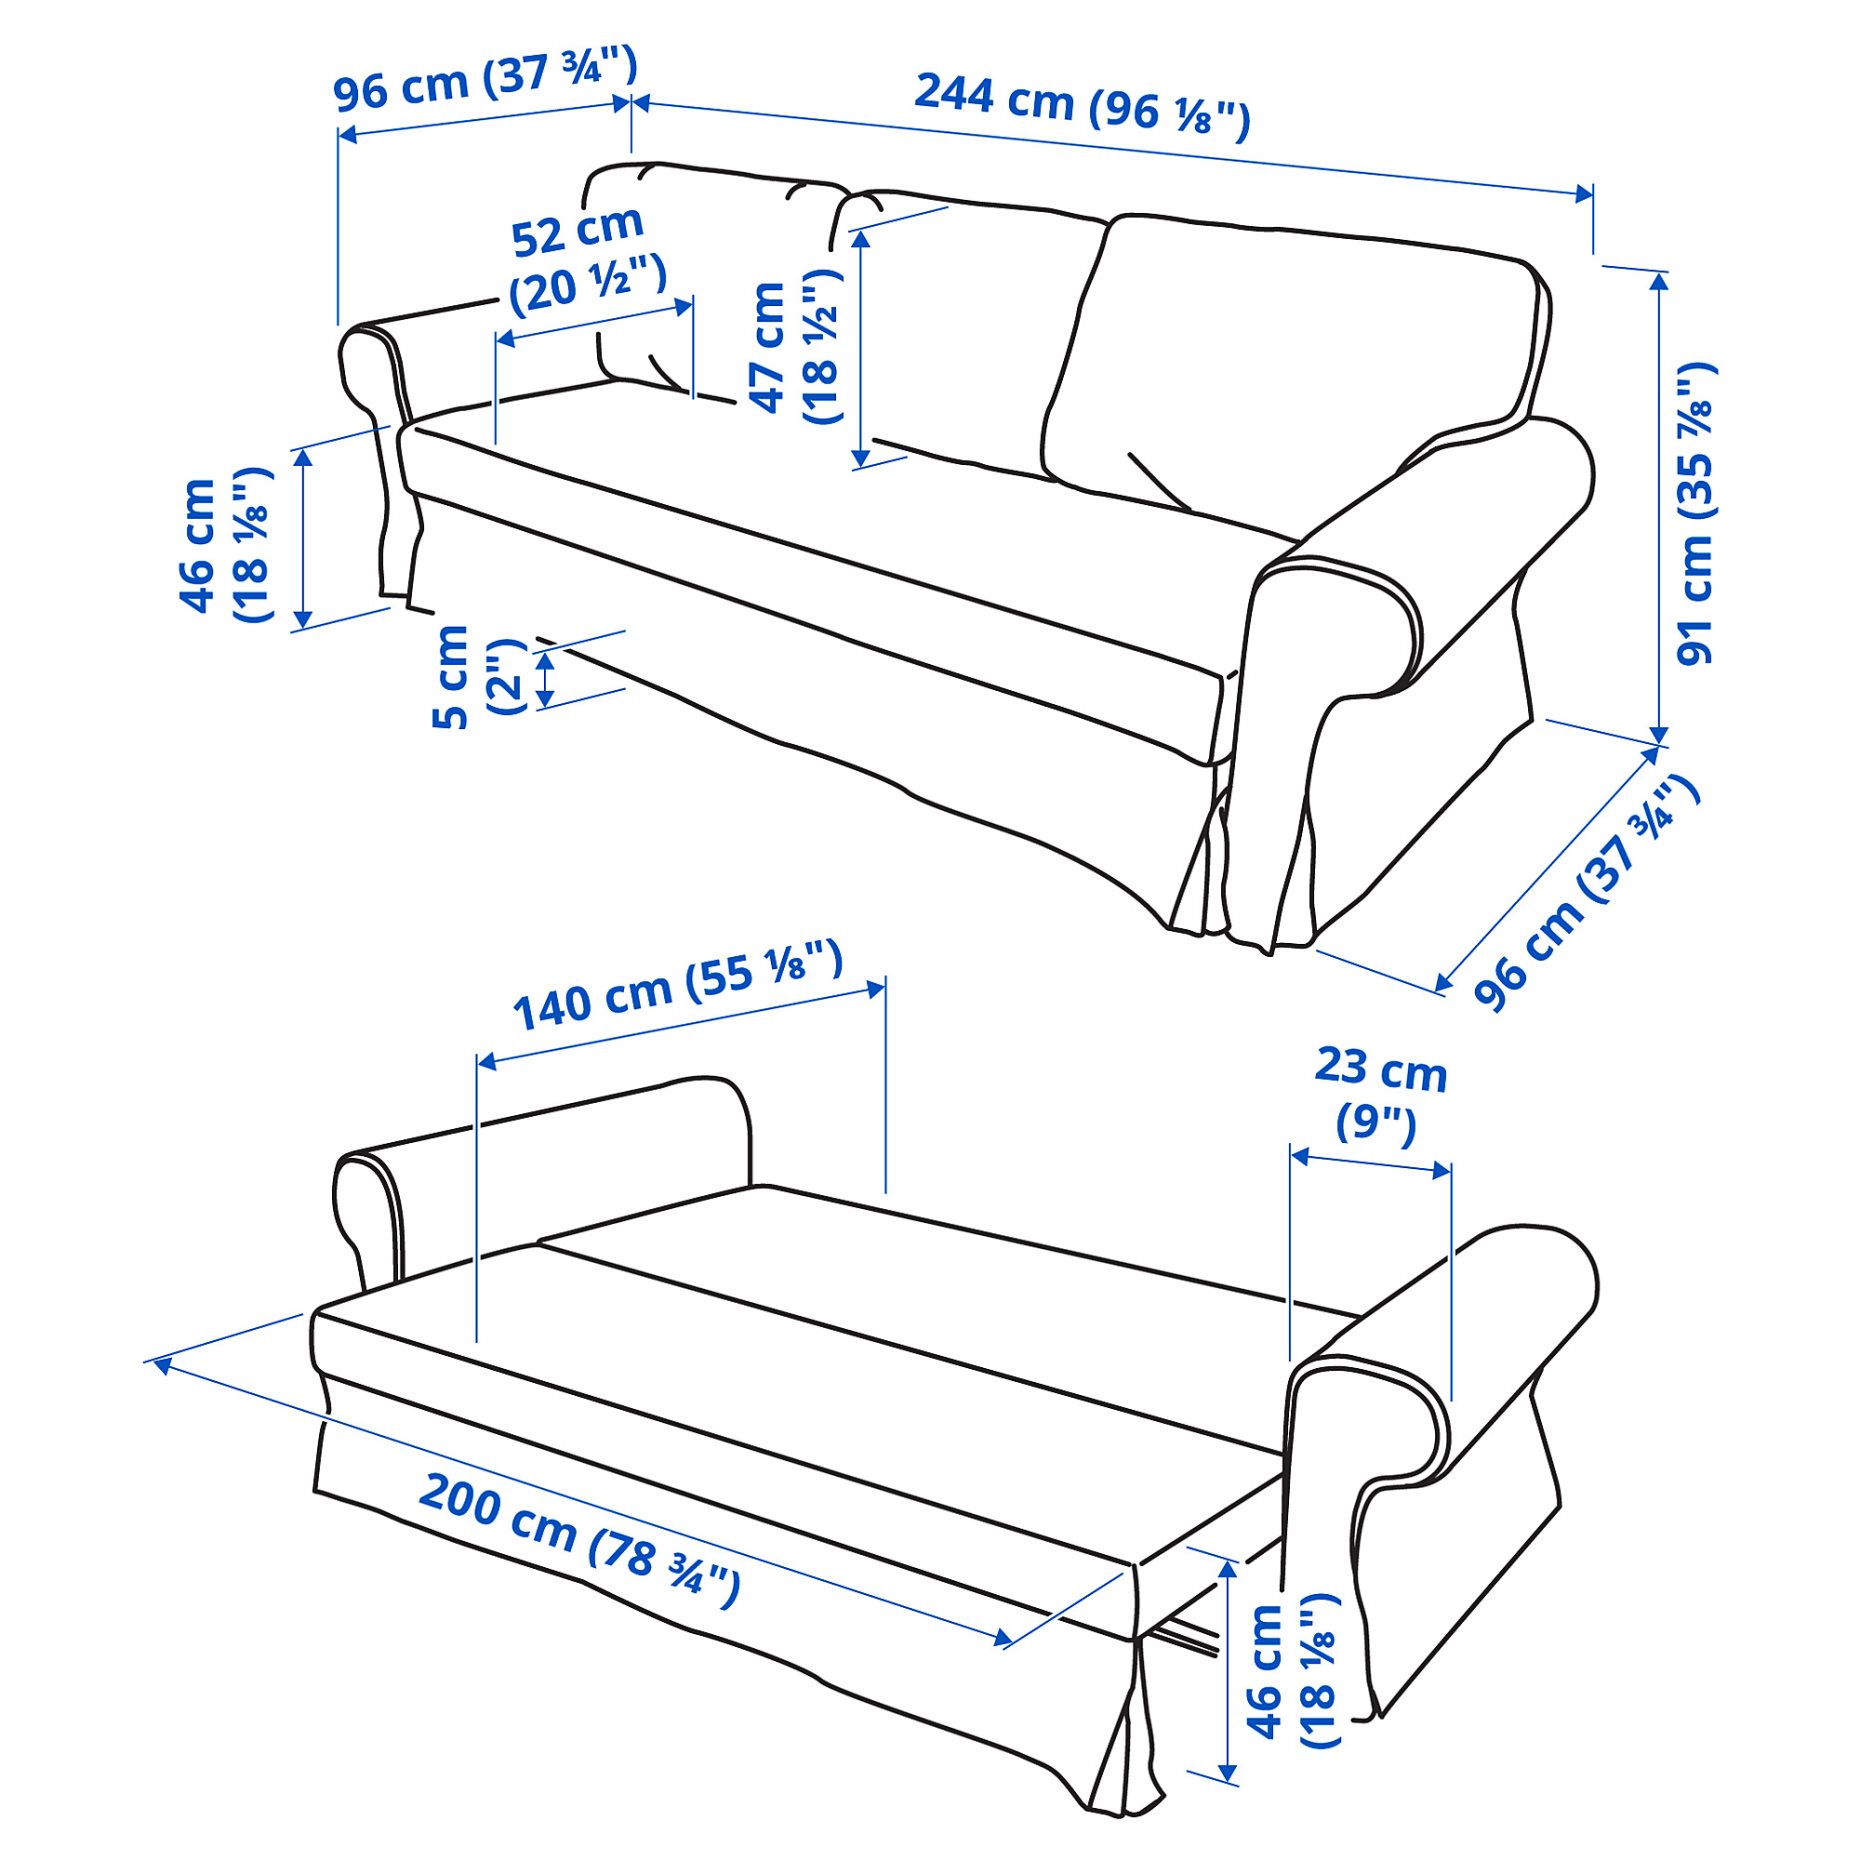 VRETSTORP, 3-seat sofa-bed, 693.265.86